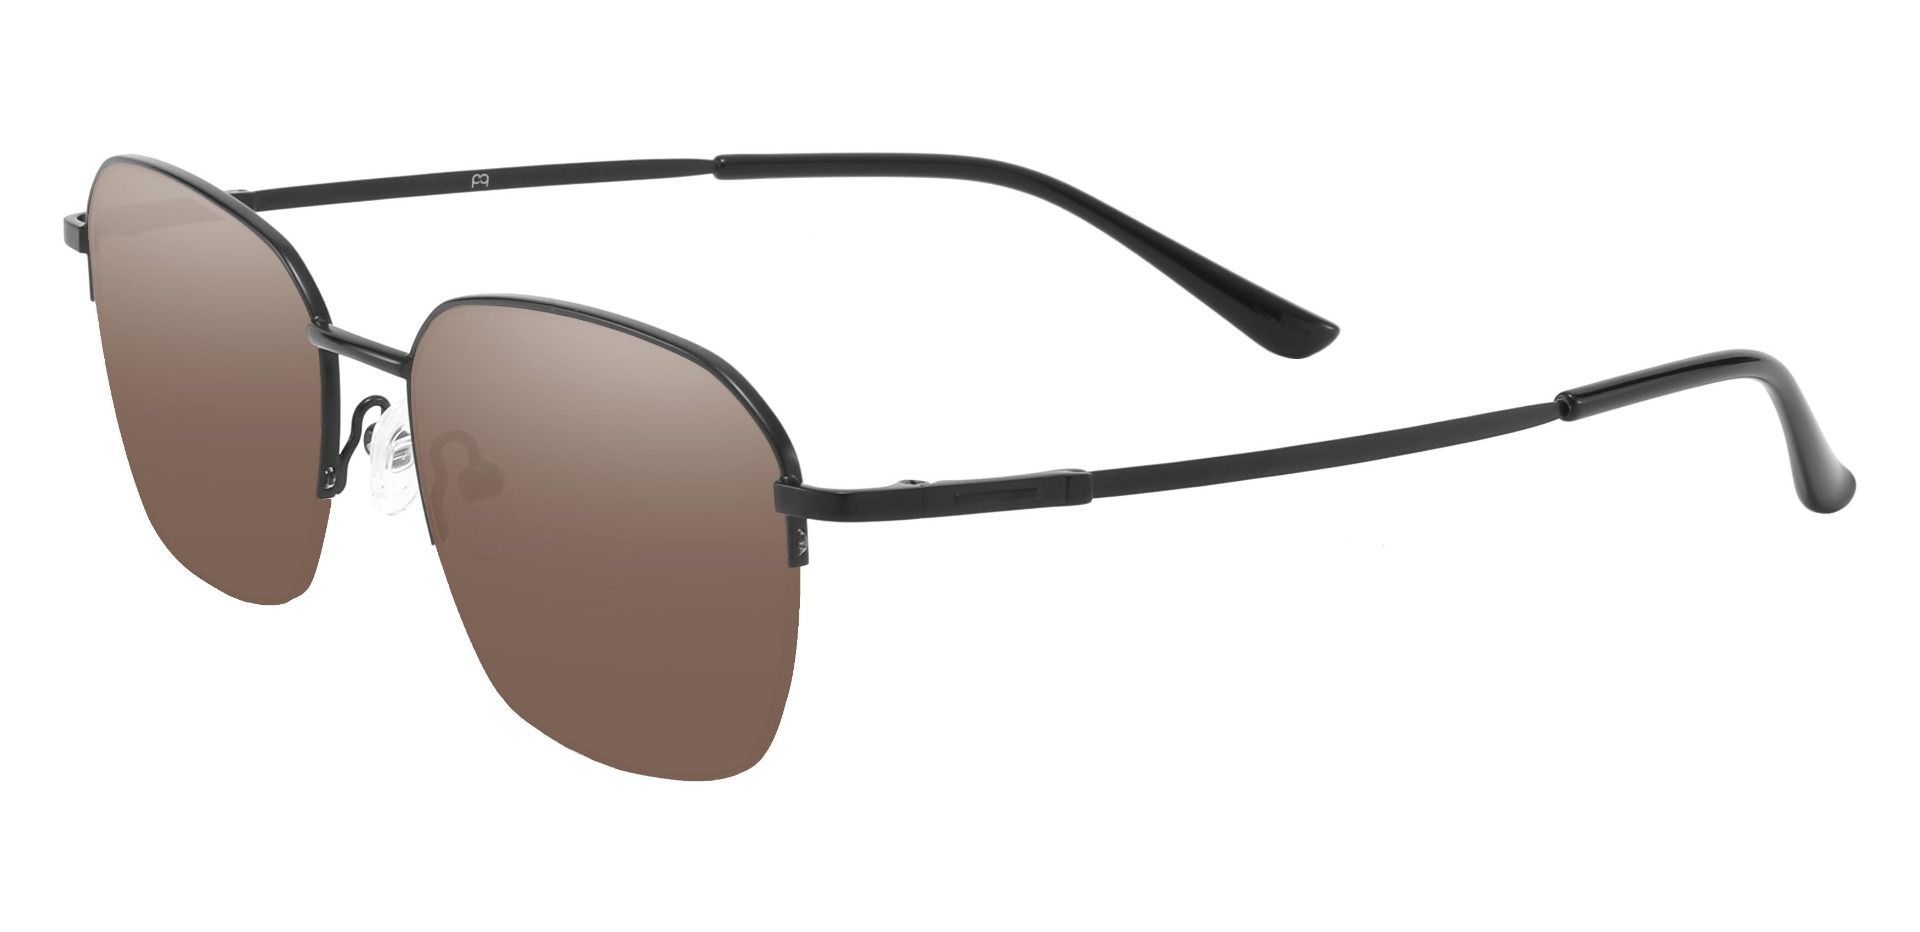 Wilton Geometric Reading Sunglasses - Black Frame With Brown Lenses